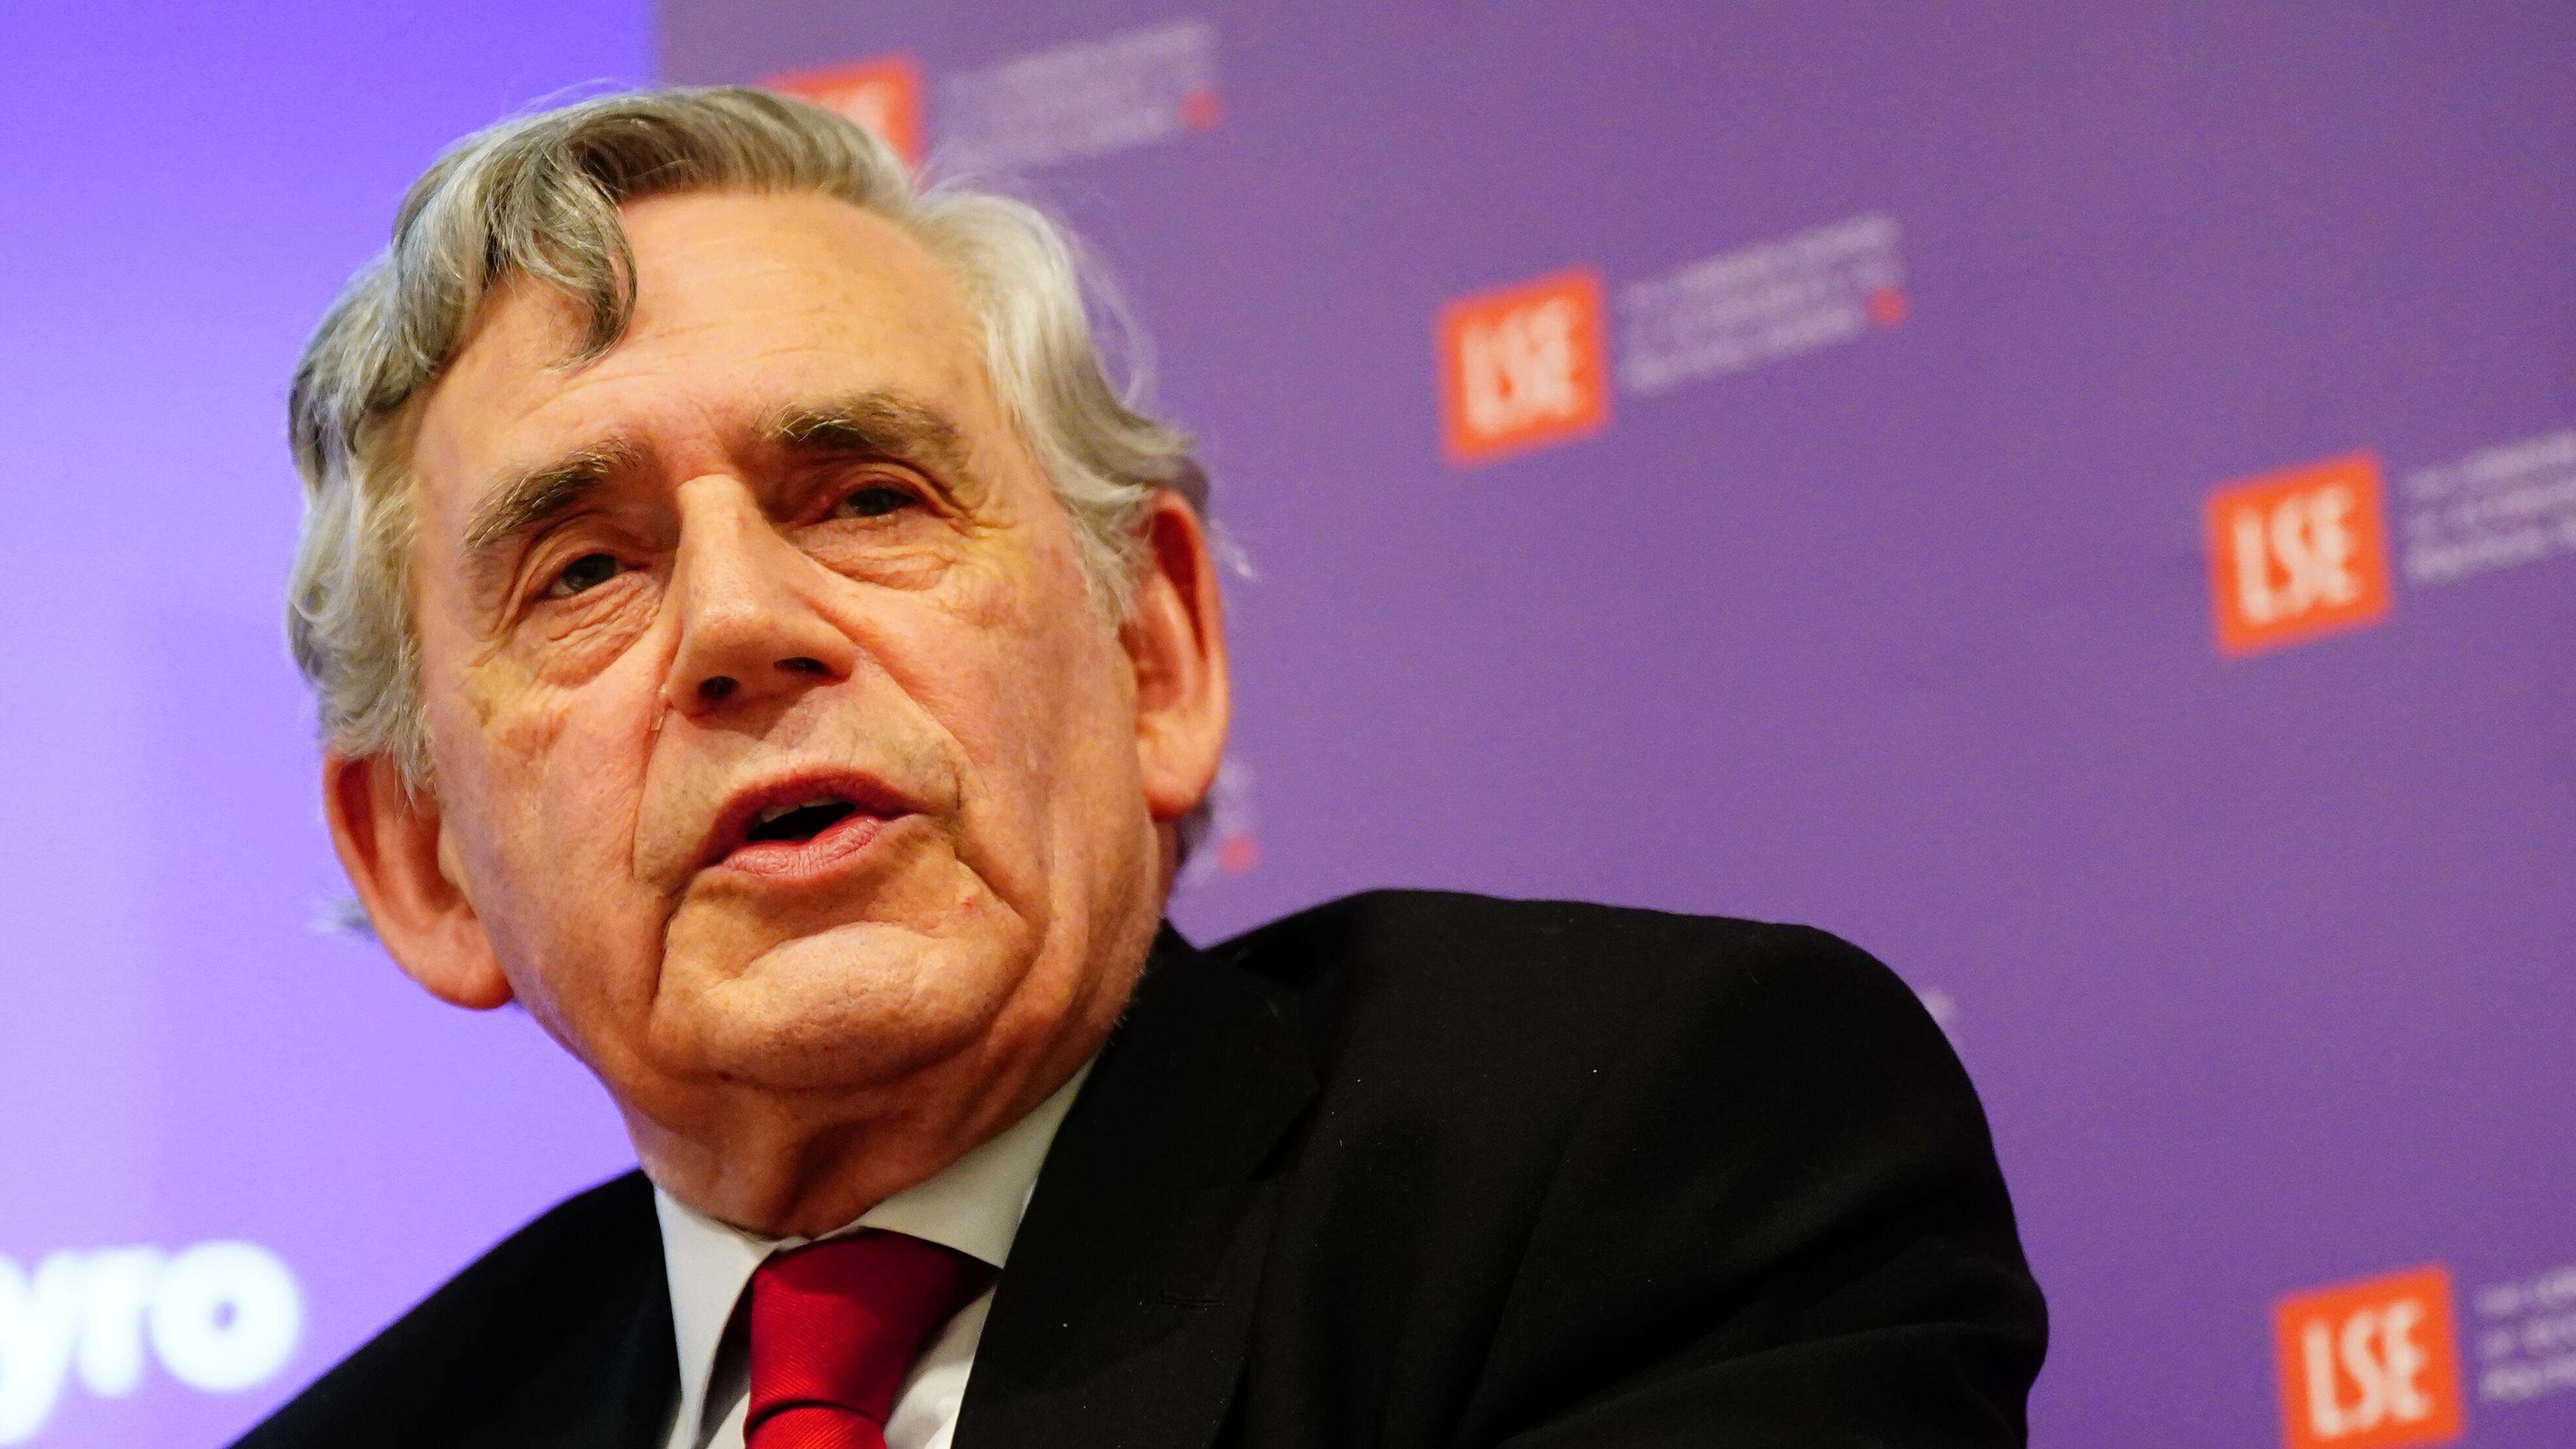 Gordon Brown has been made a Companion of Honour